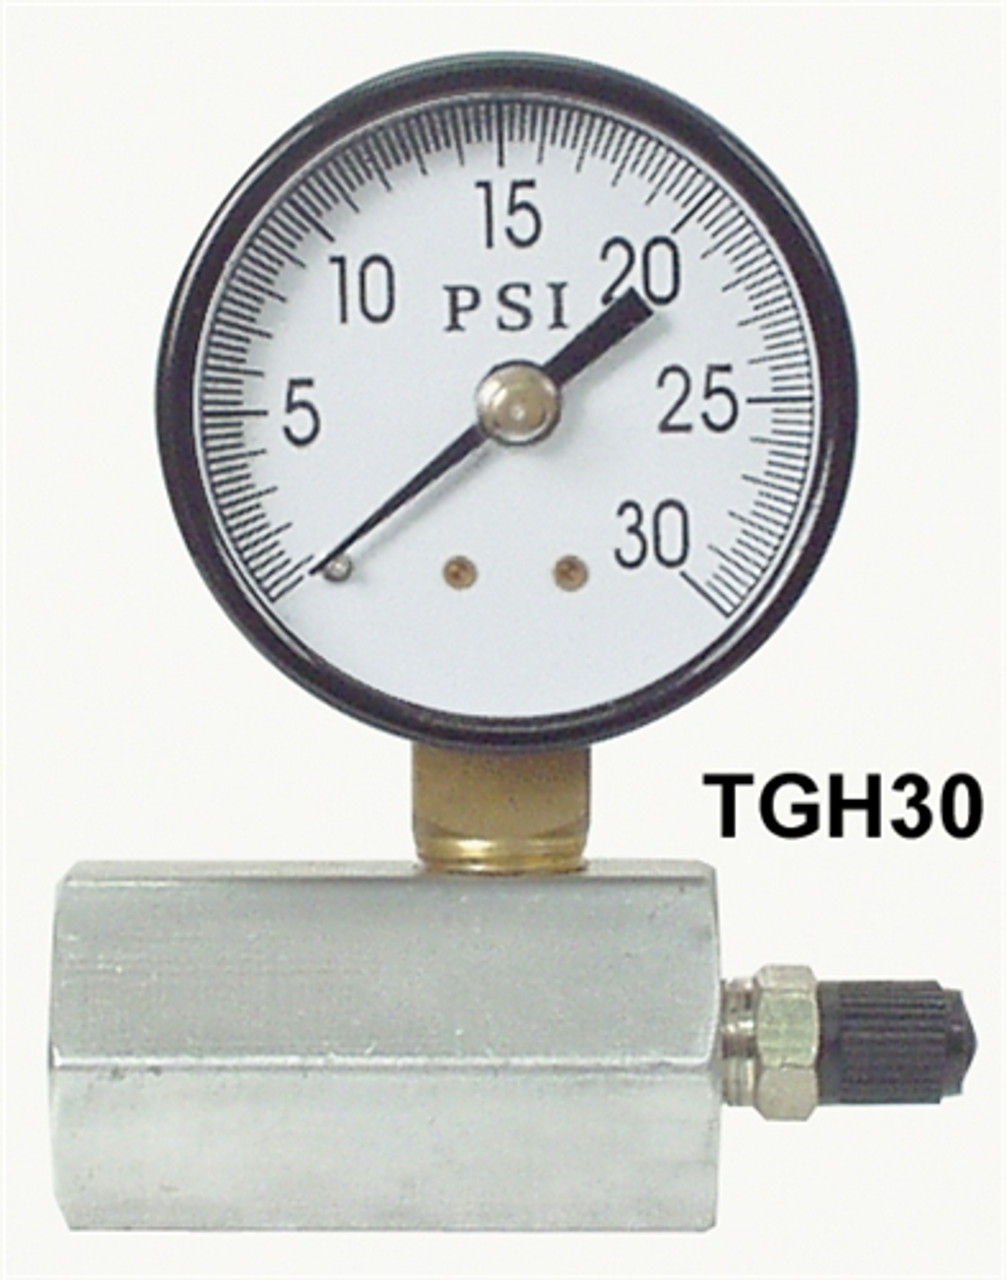 Uniweld 41356 (TGB60) 3/4" GAS TEST GAUGE, 60 PSI, TOP MOUNT - D-Pkg.